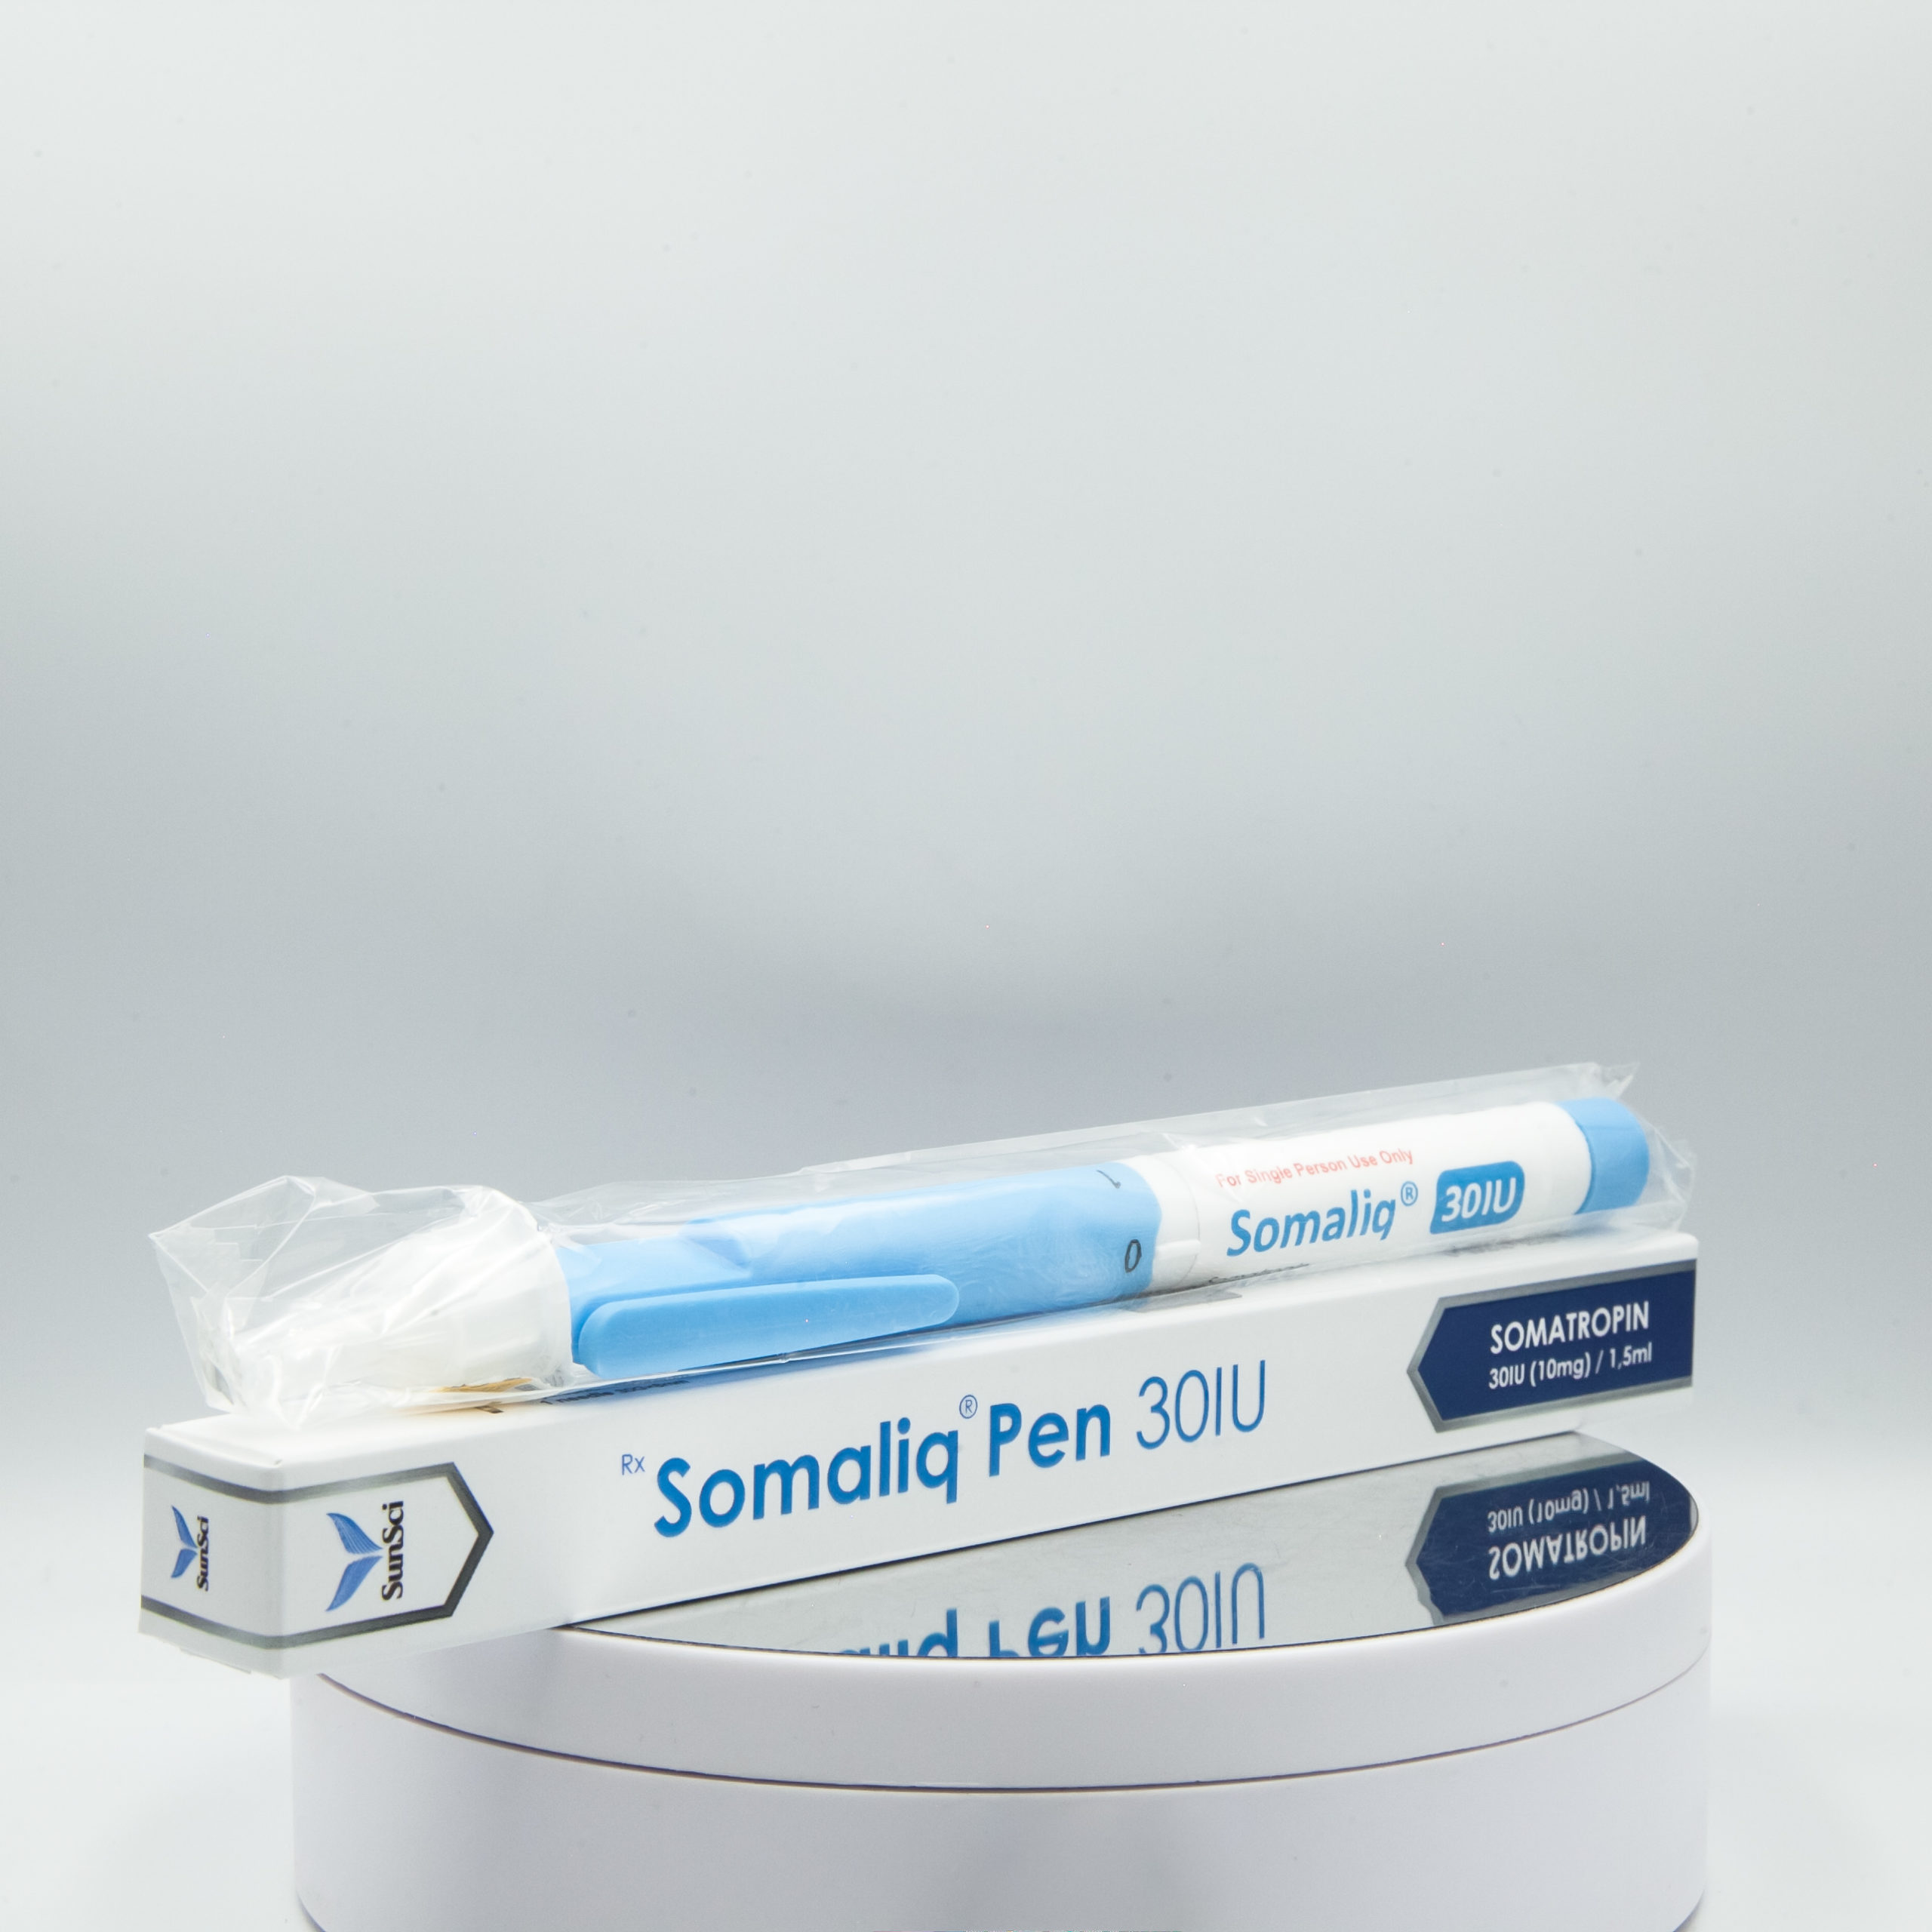 Somaliq Pen SunSci Pharmaceutical